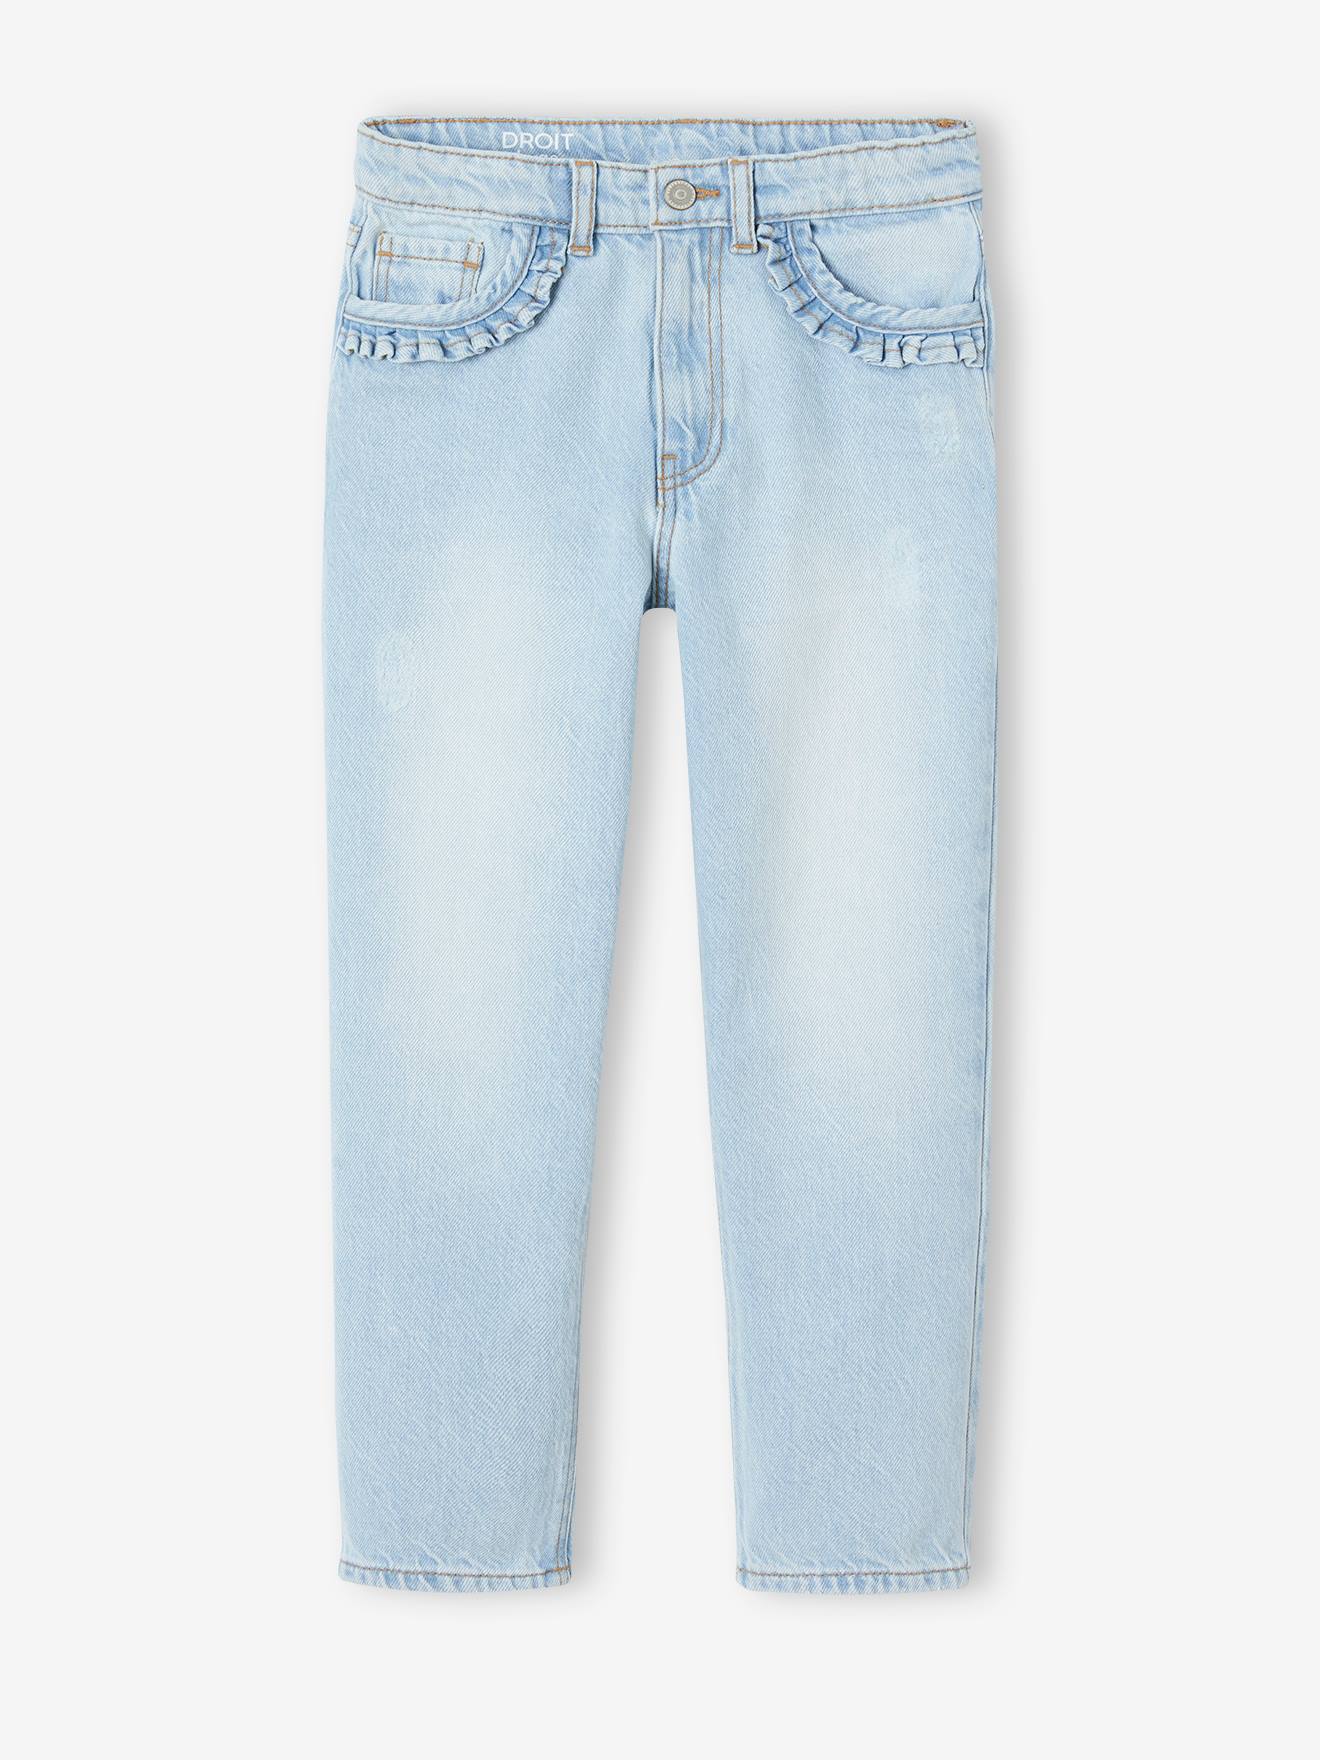 WIDE Hip, Straight Leg MorphologiK Jeans for Girls bleached denim